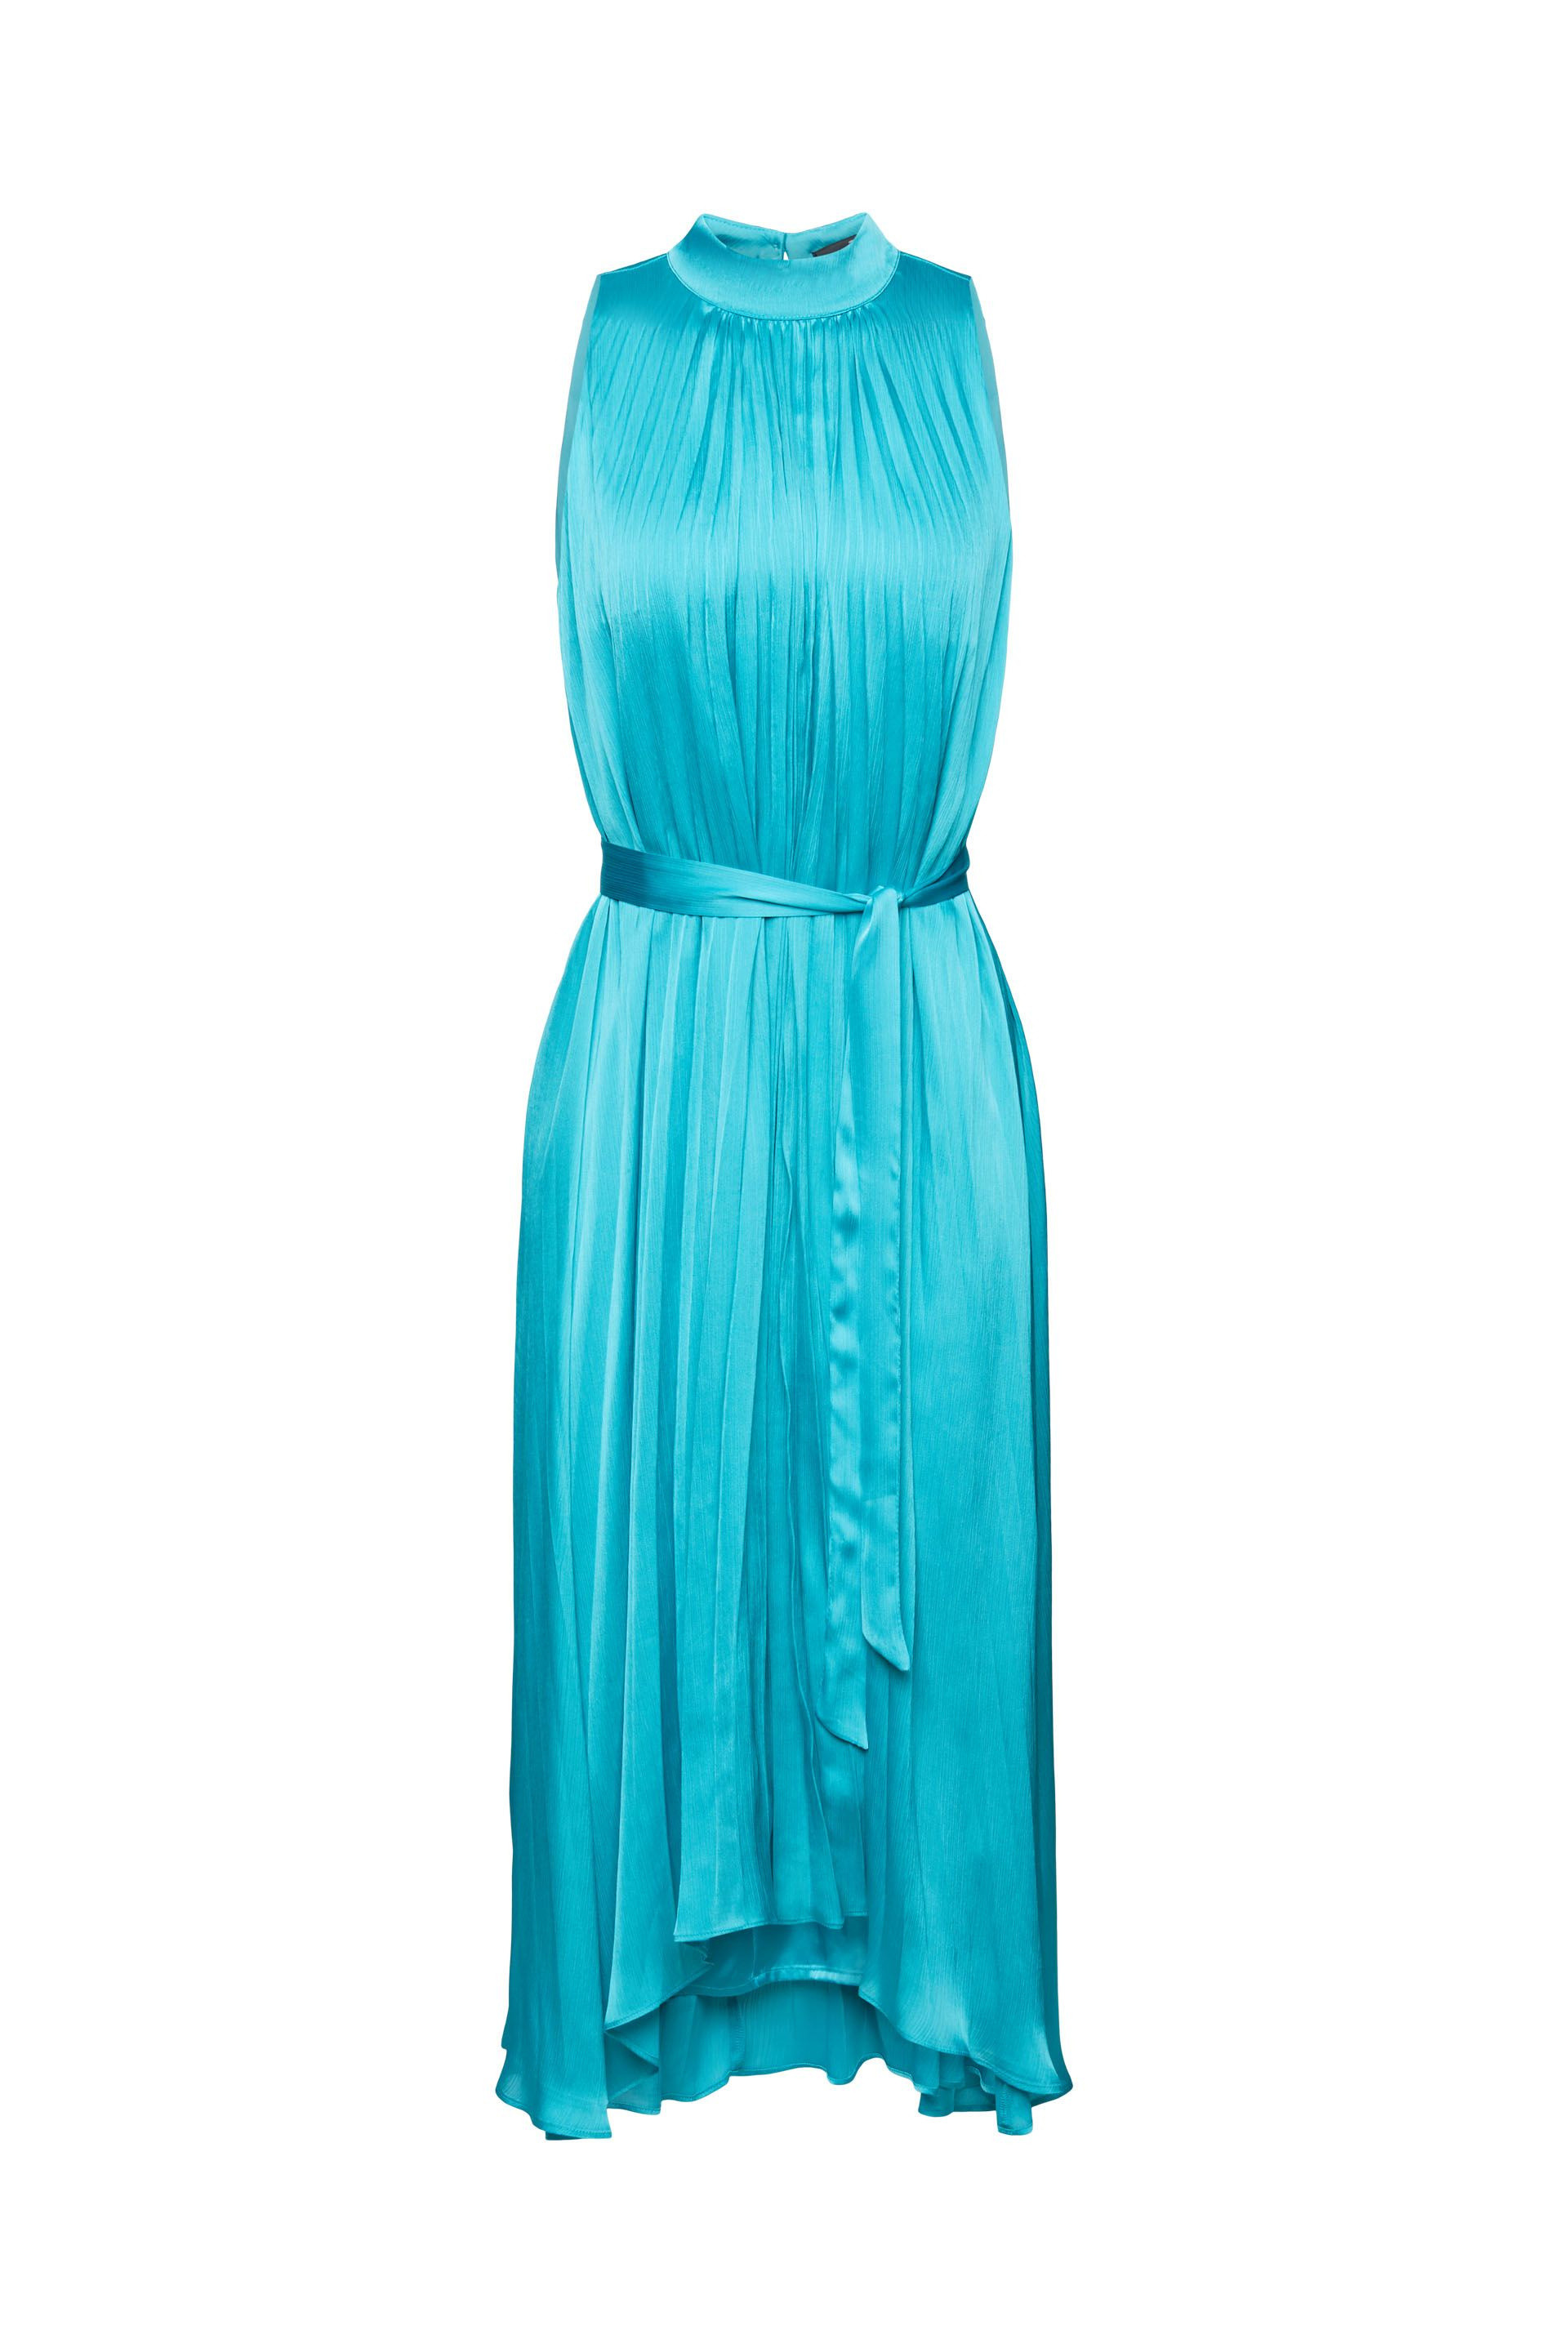 Esprit - Pleated satin dress, Turquoise, large image number 0